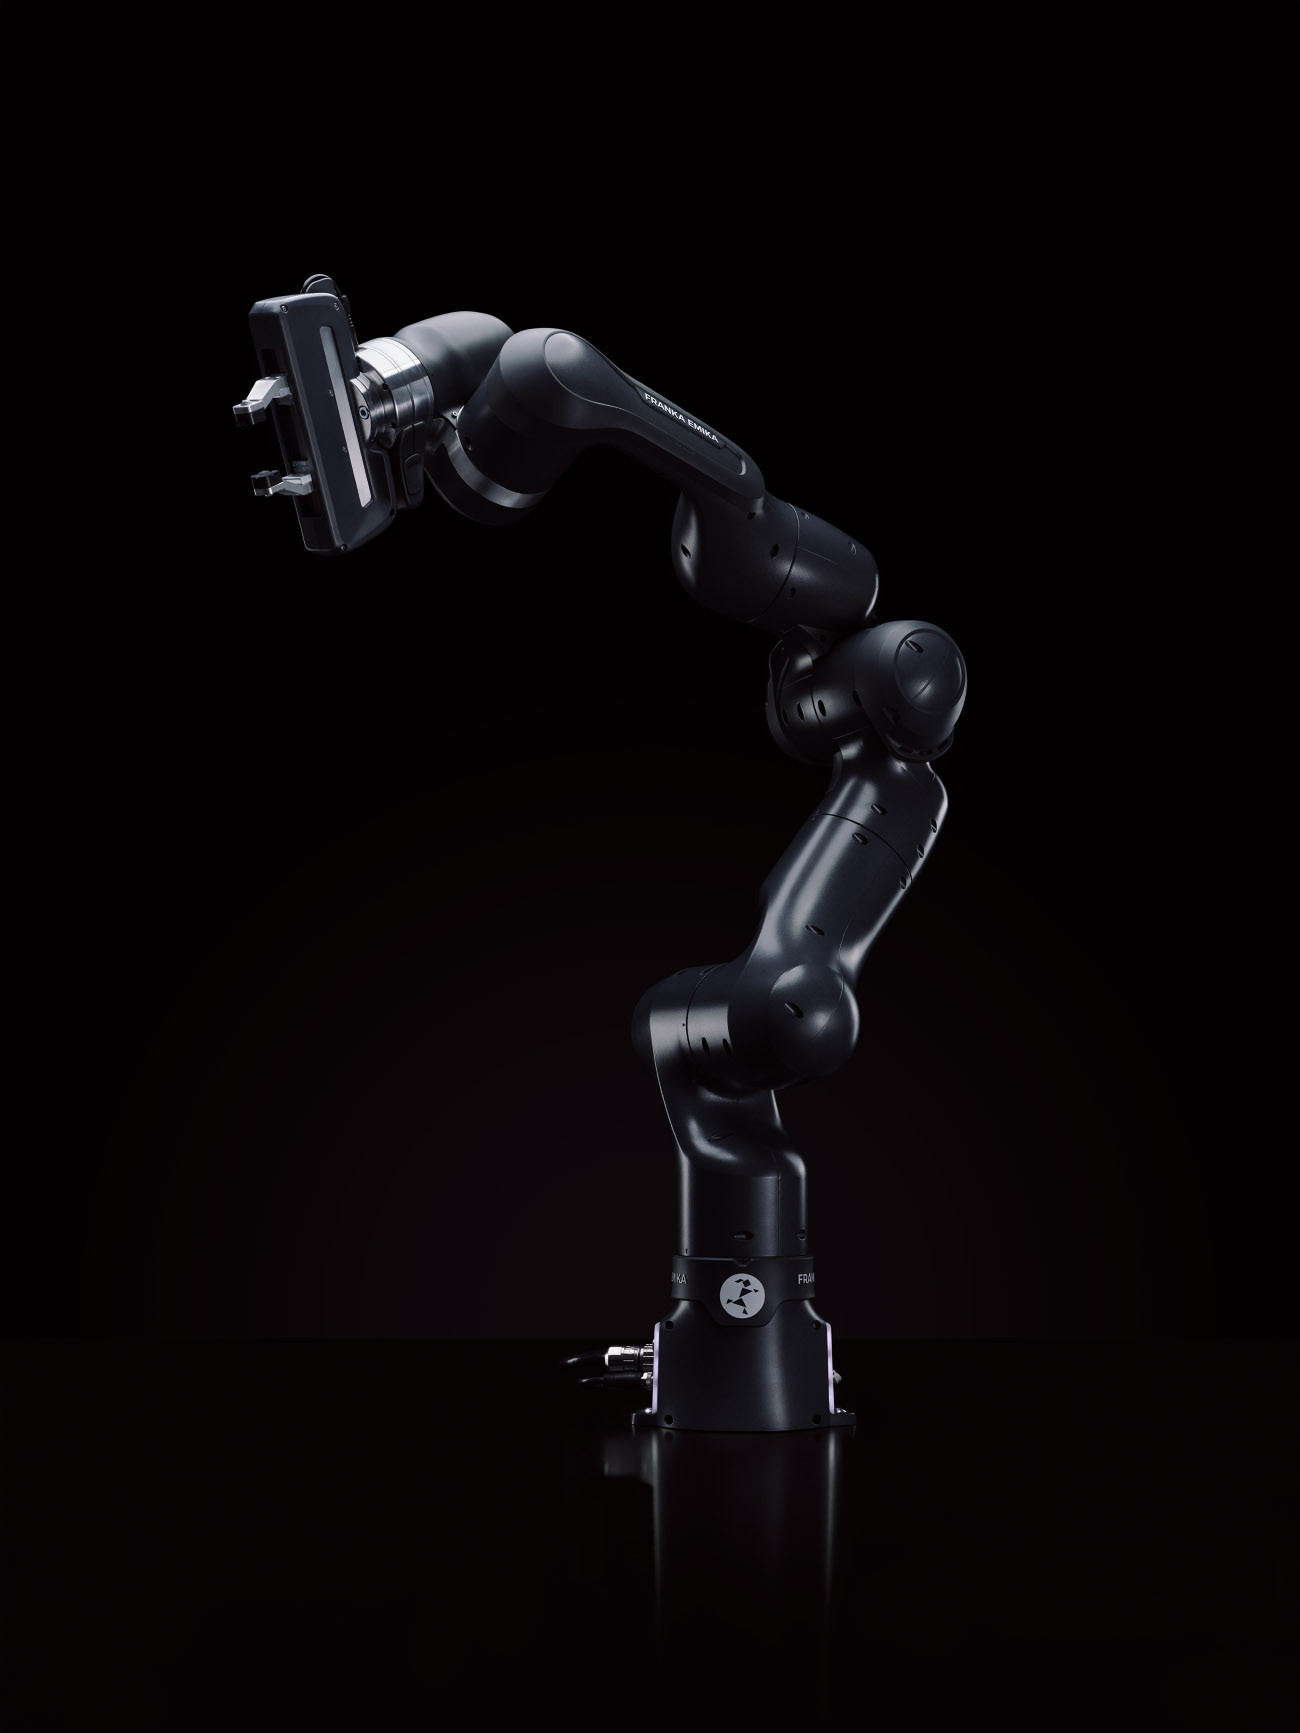 Franka Robotics beauty shot of Robot Arm